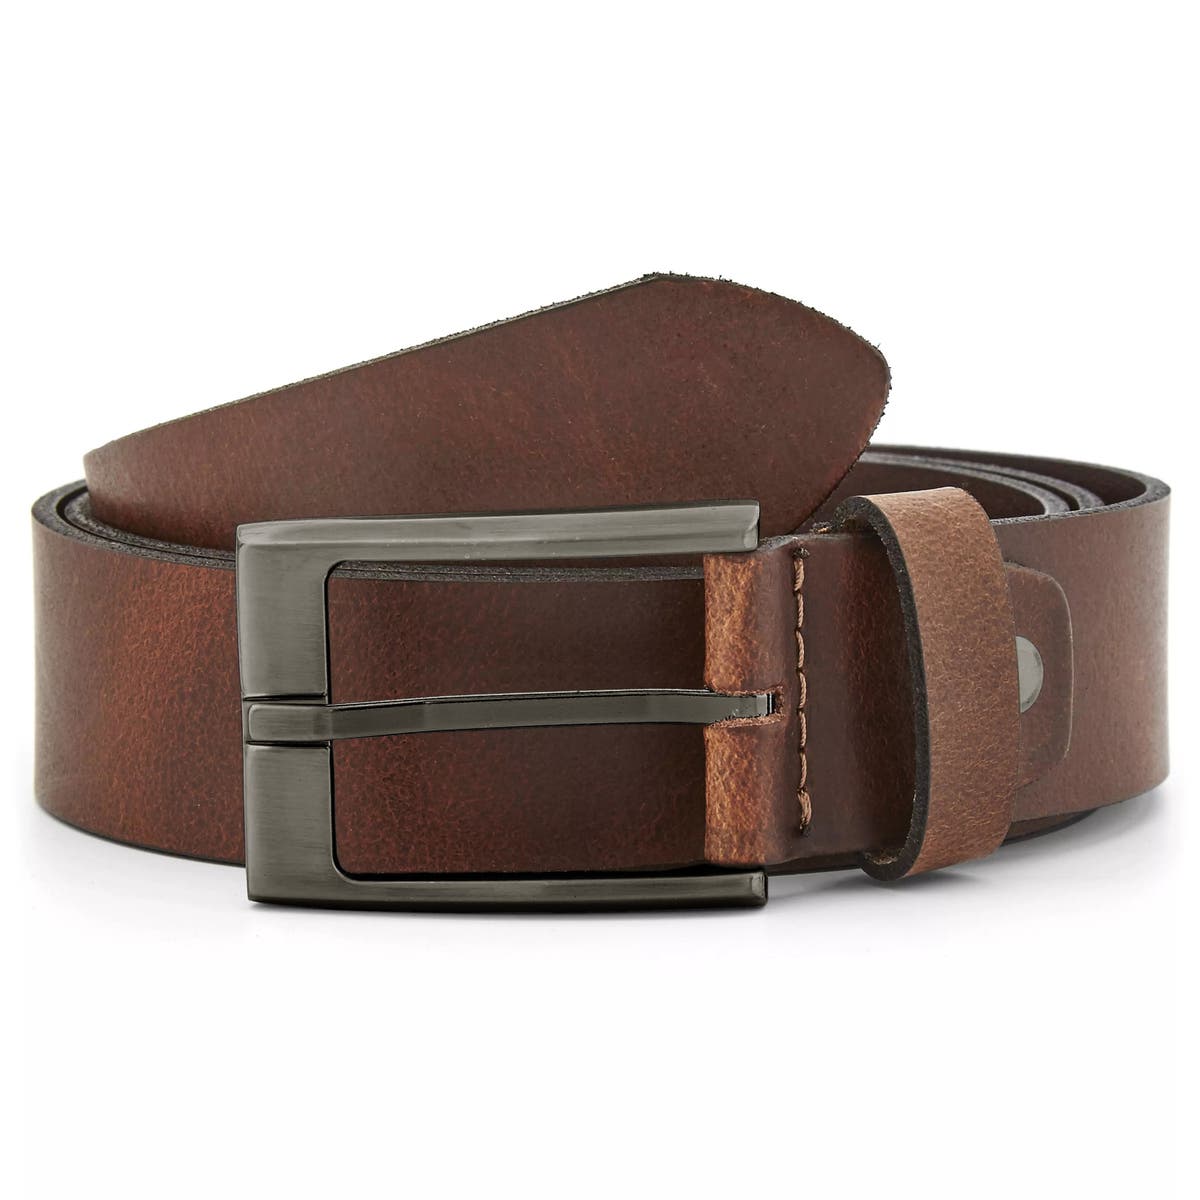 Men's belts | 90 Styles for men in stock